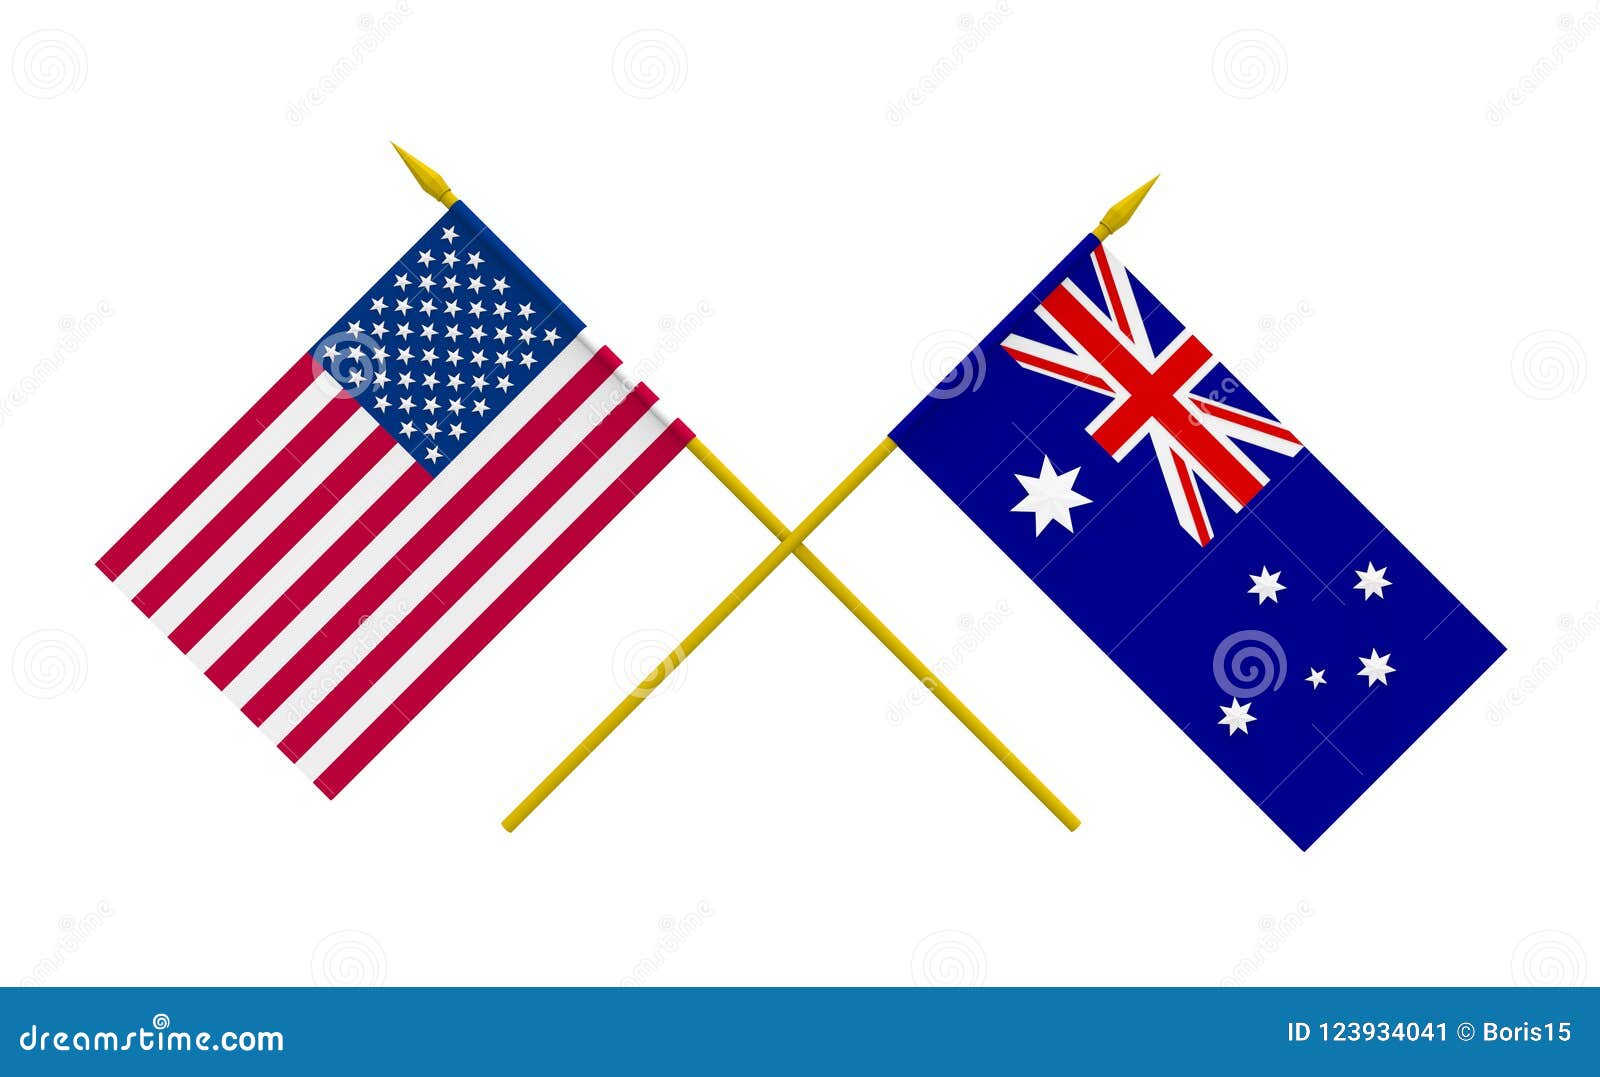 Flags, Australia and USA stock illustration. Illustration of summit